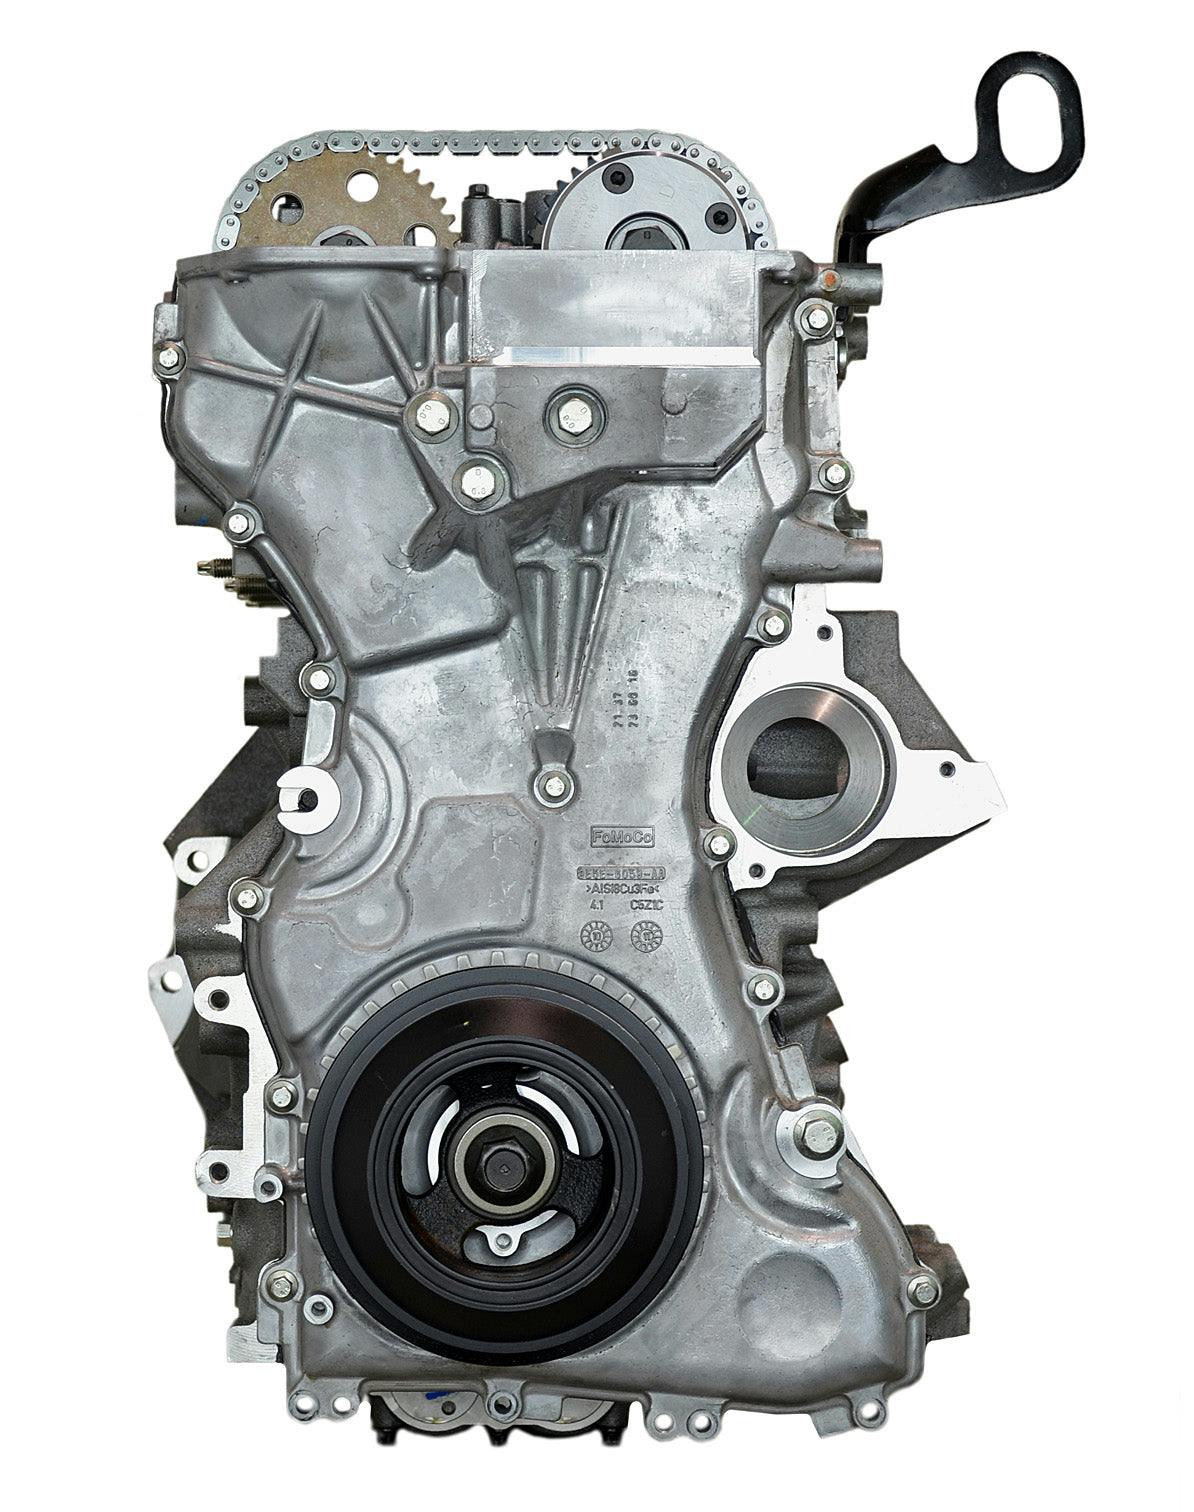 2.5L Inline-4 Engine for 2009-2012 Ford Escape, Fusion/Mazda Tribute/Mercury Mariner, Milan